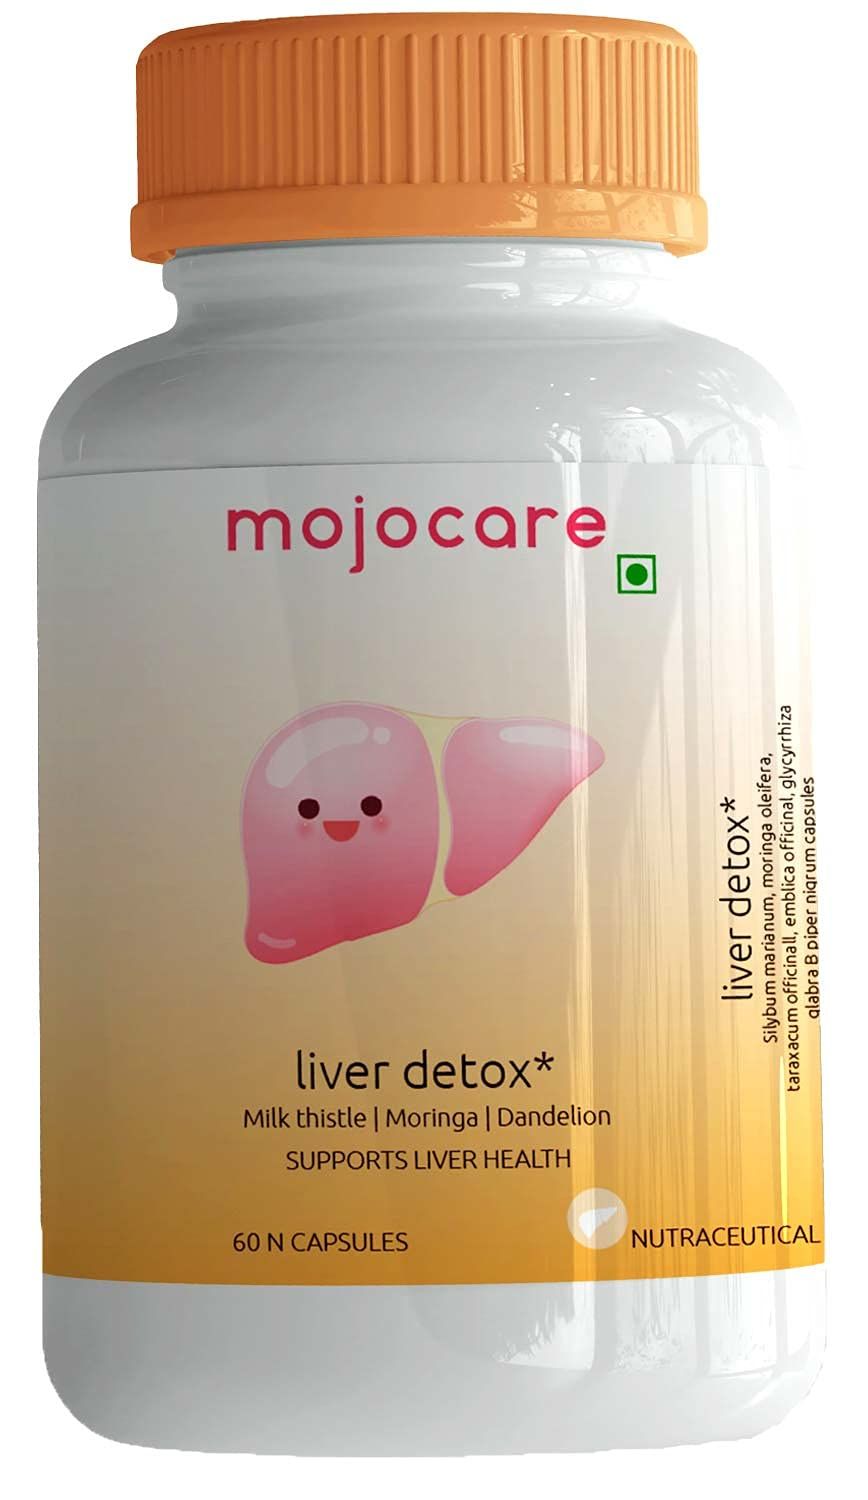 Mojocare Liver Detox Image